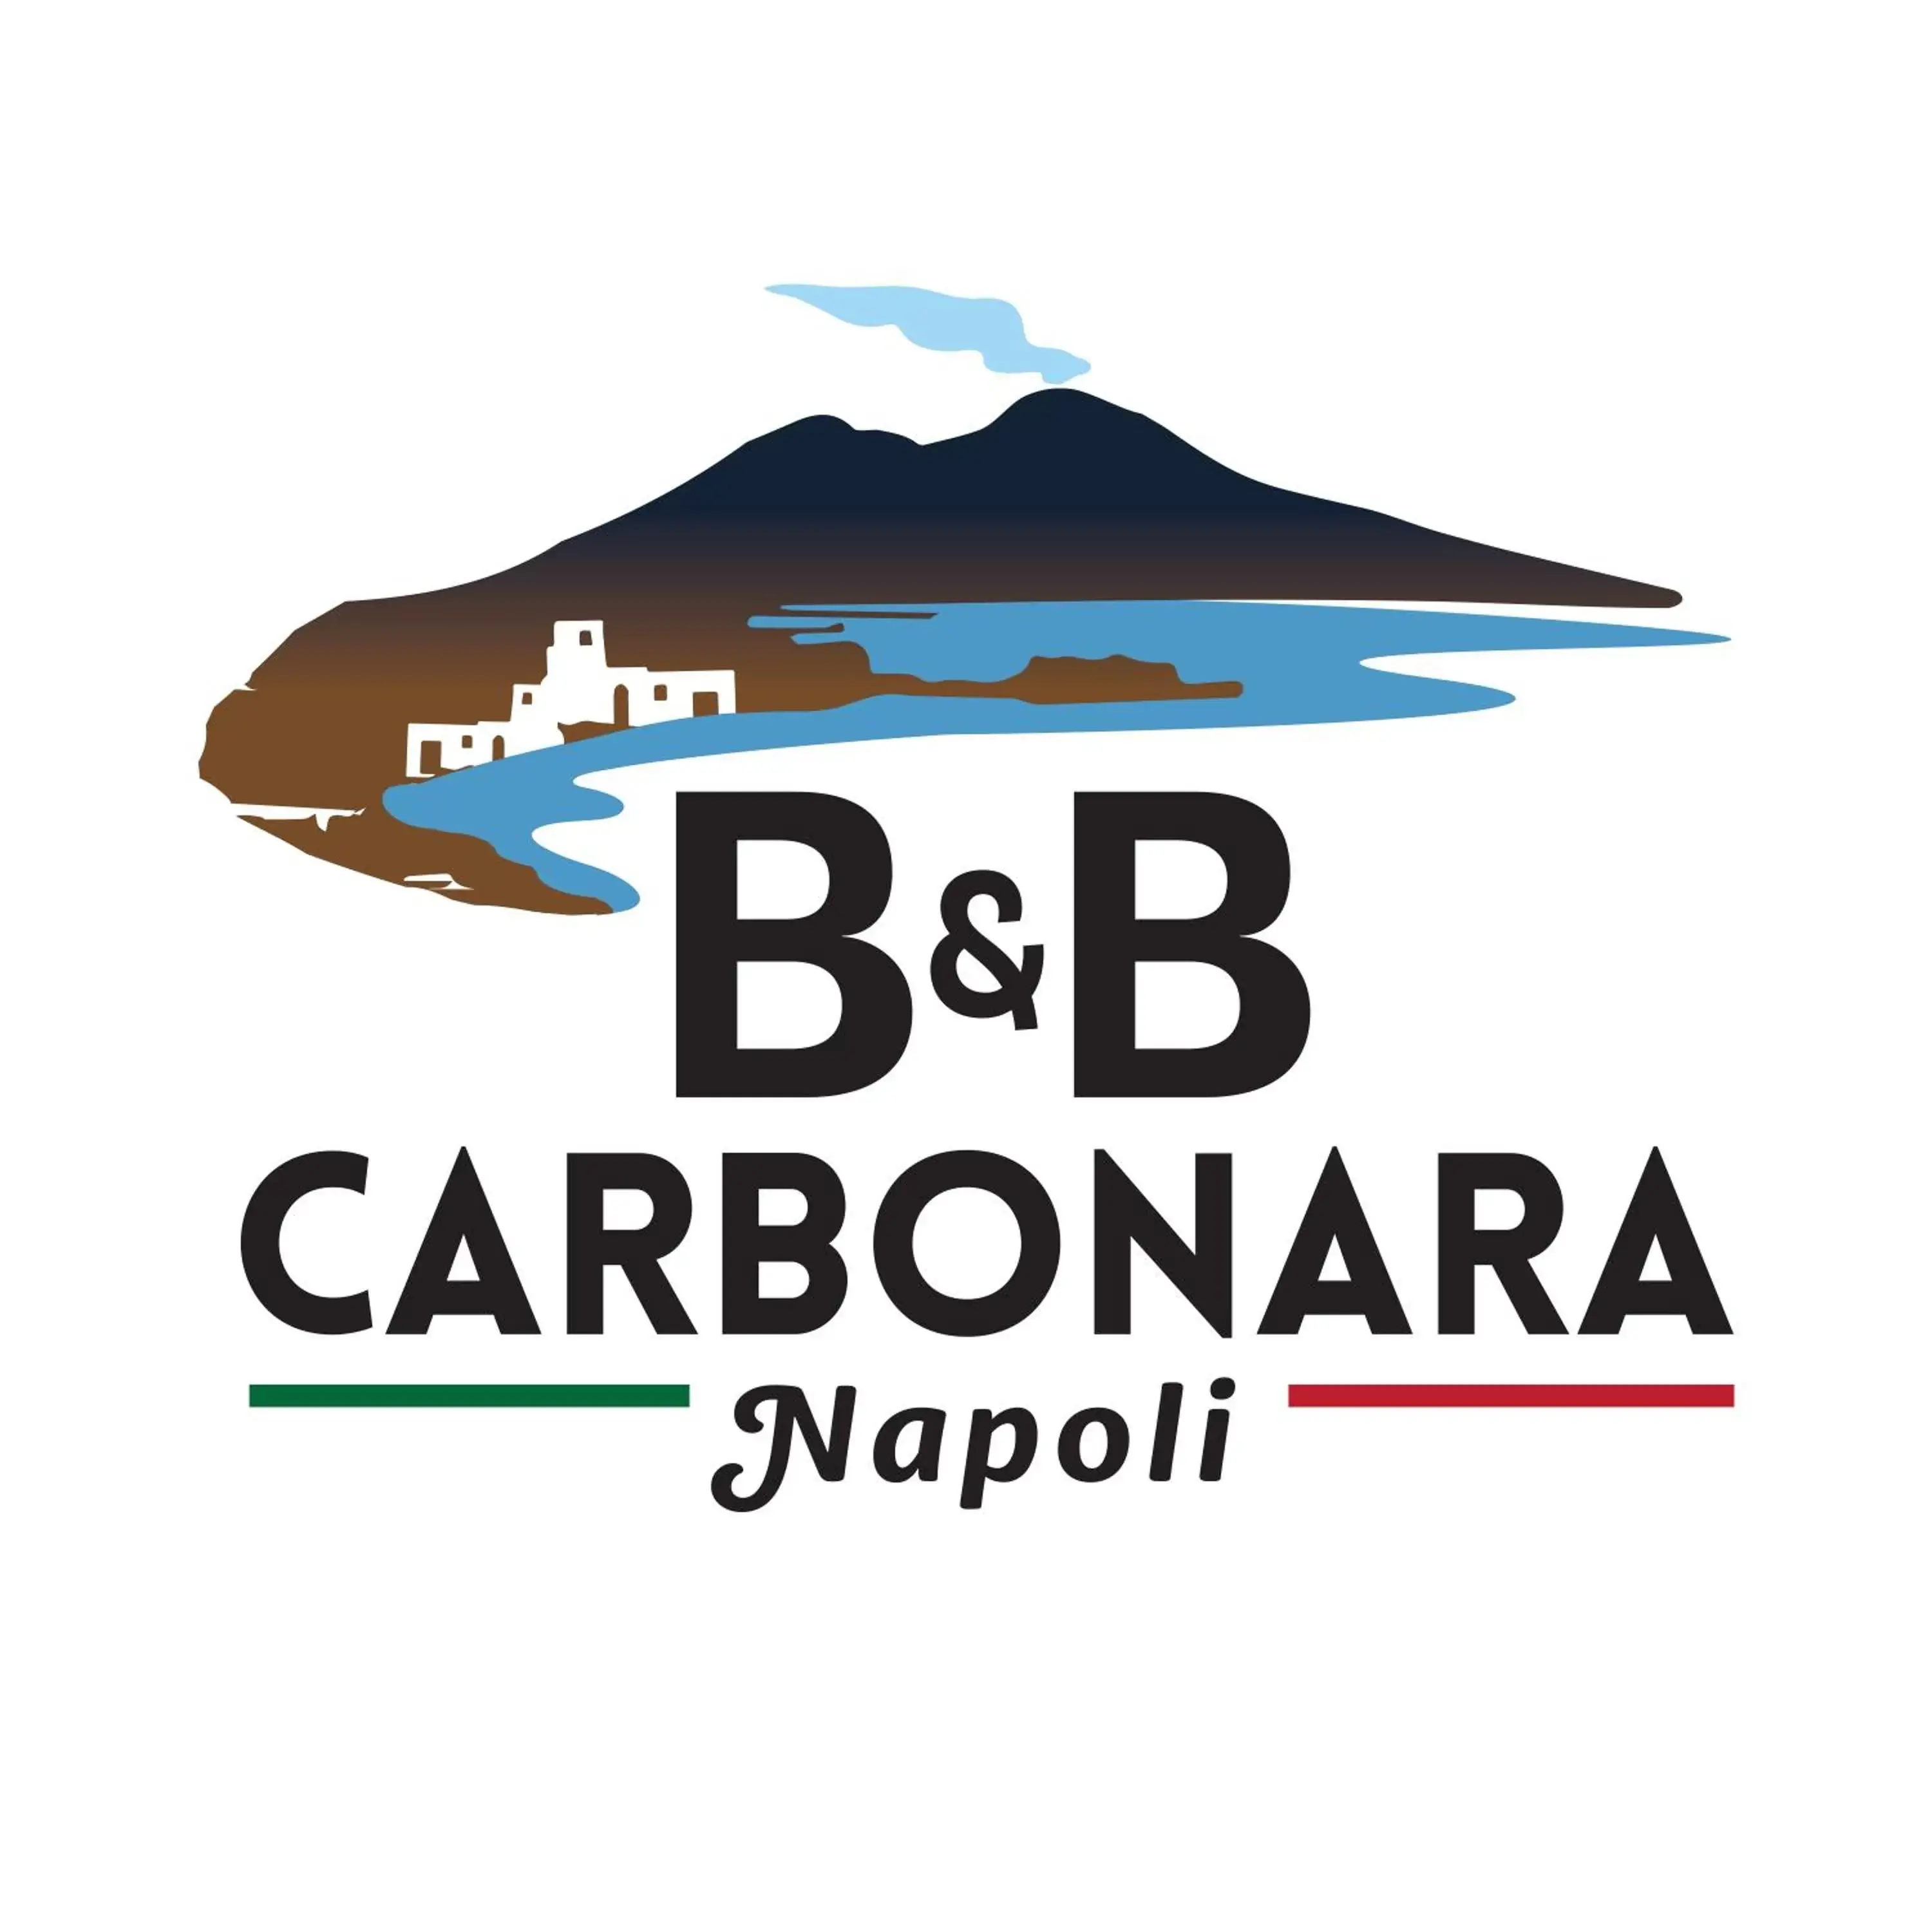 Property logo or sign in B&B Carbonara Napoli